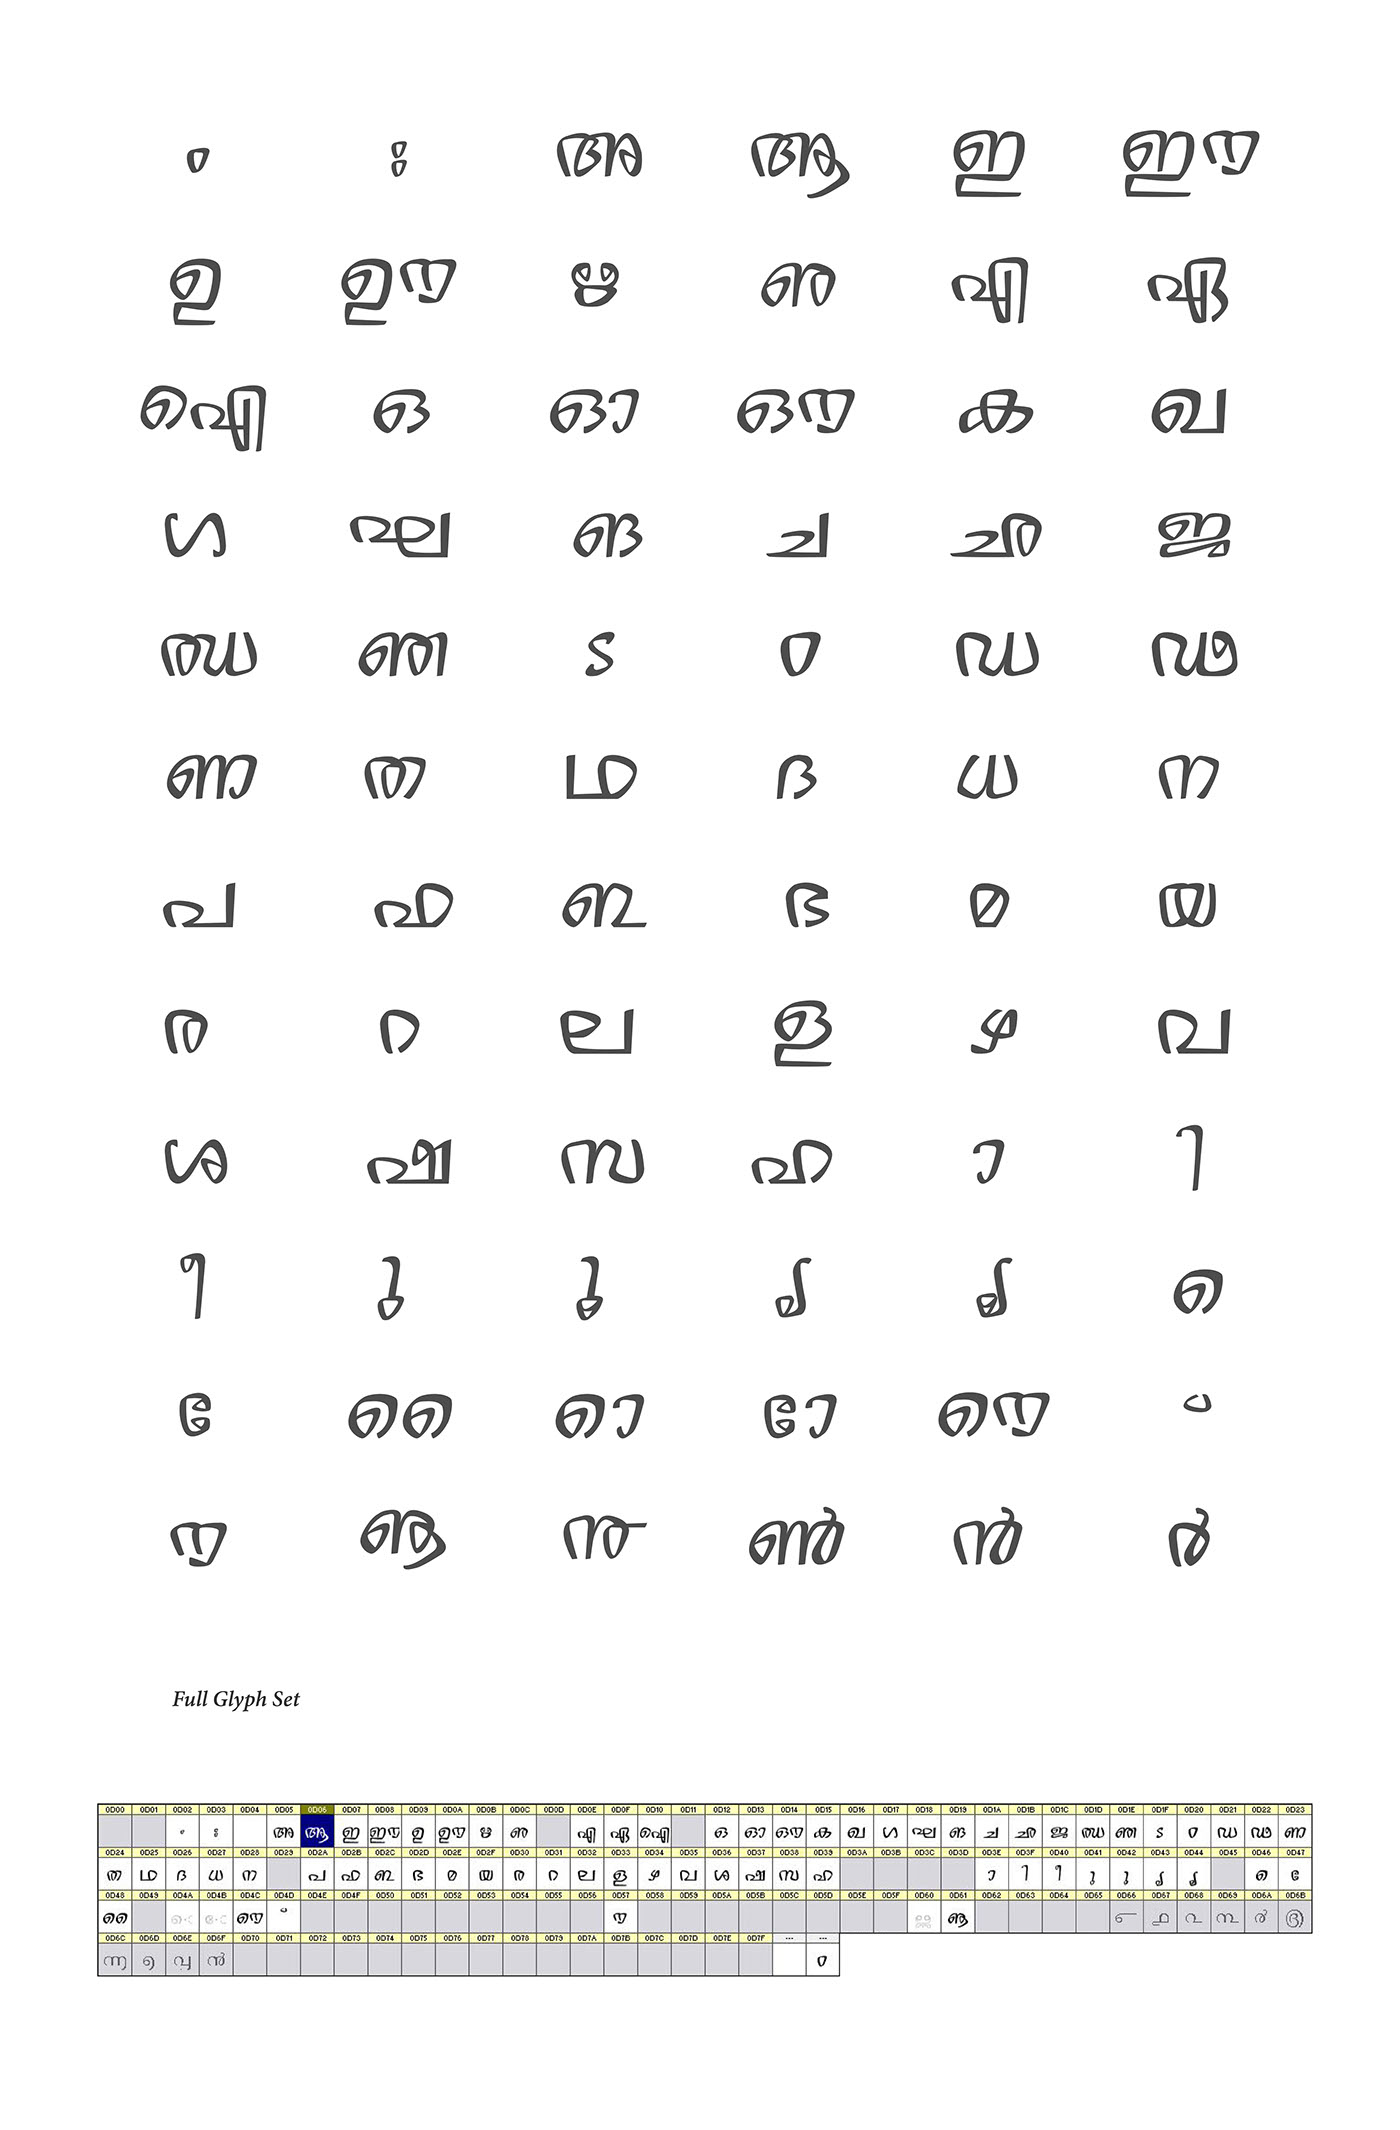 malayalam serge Typeface Indic Script alternative geometric type font Display kerala angular vector glyphs India